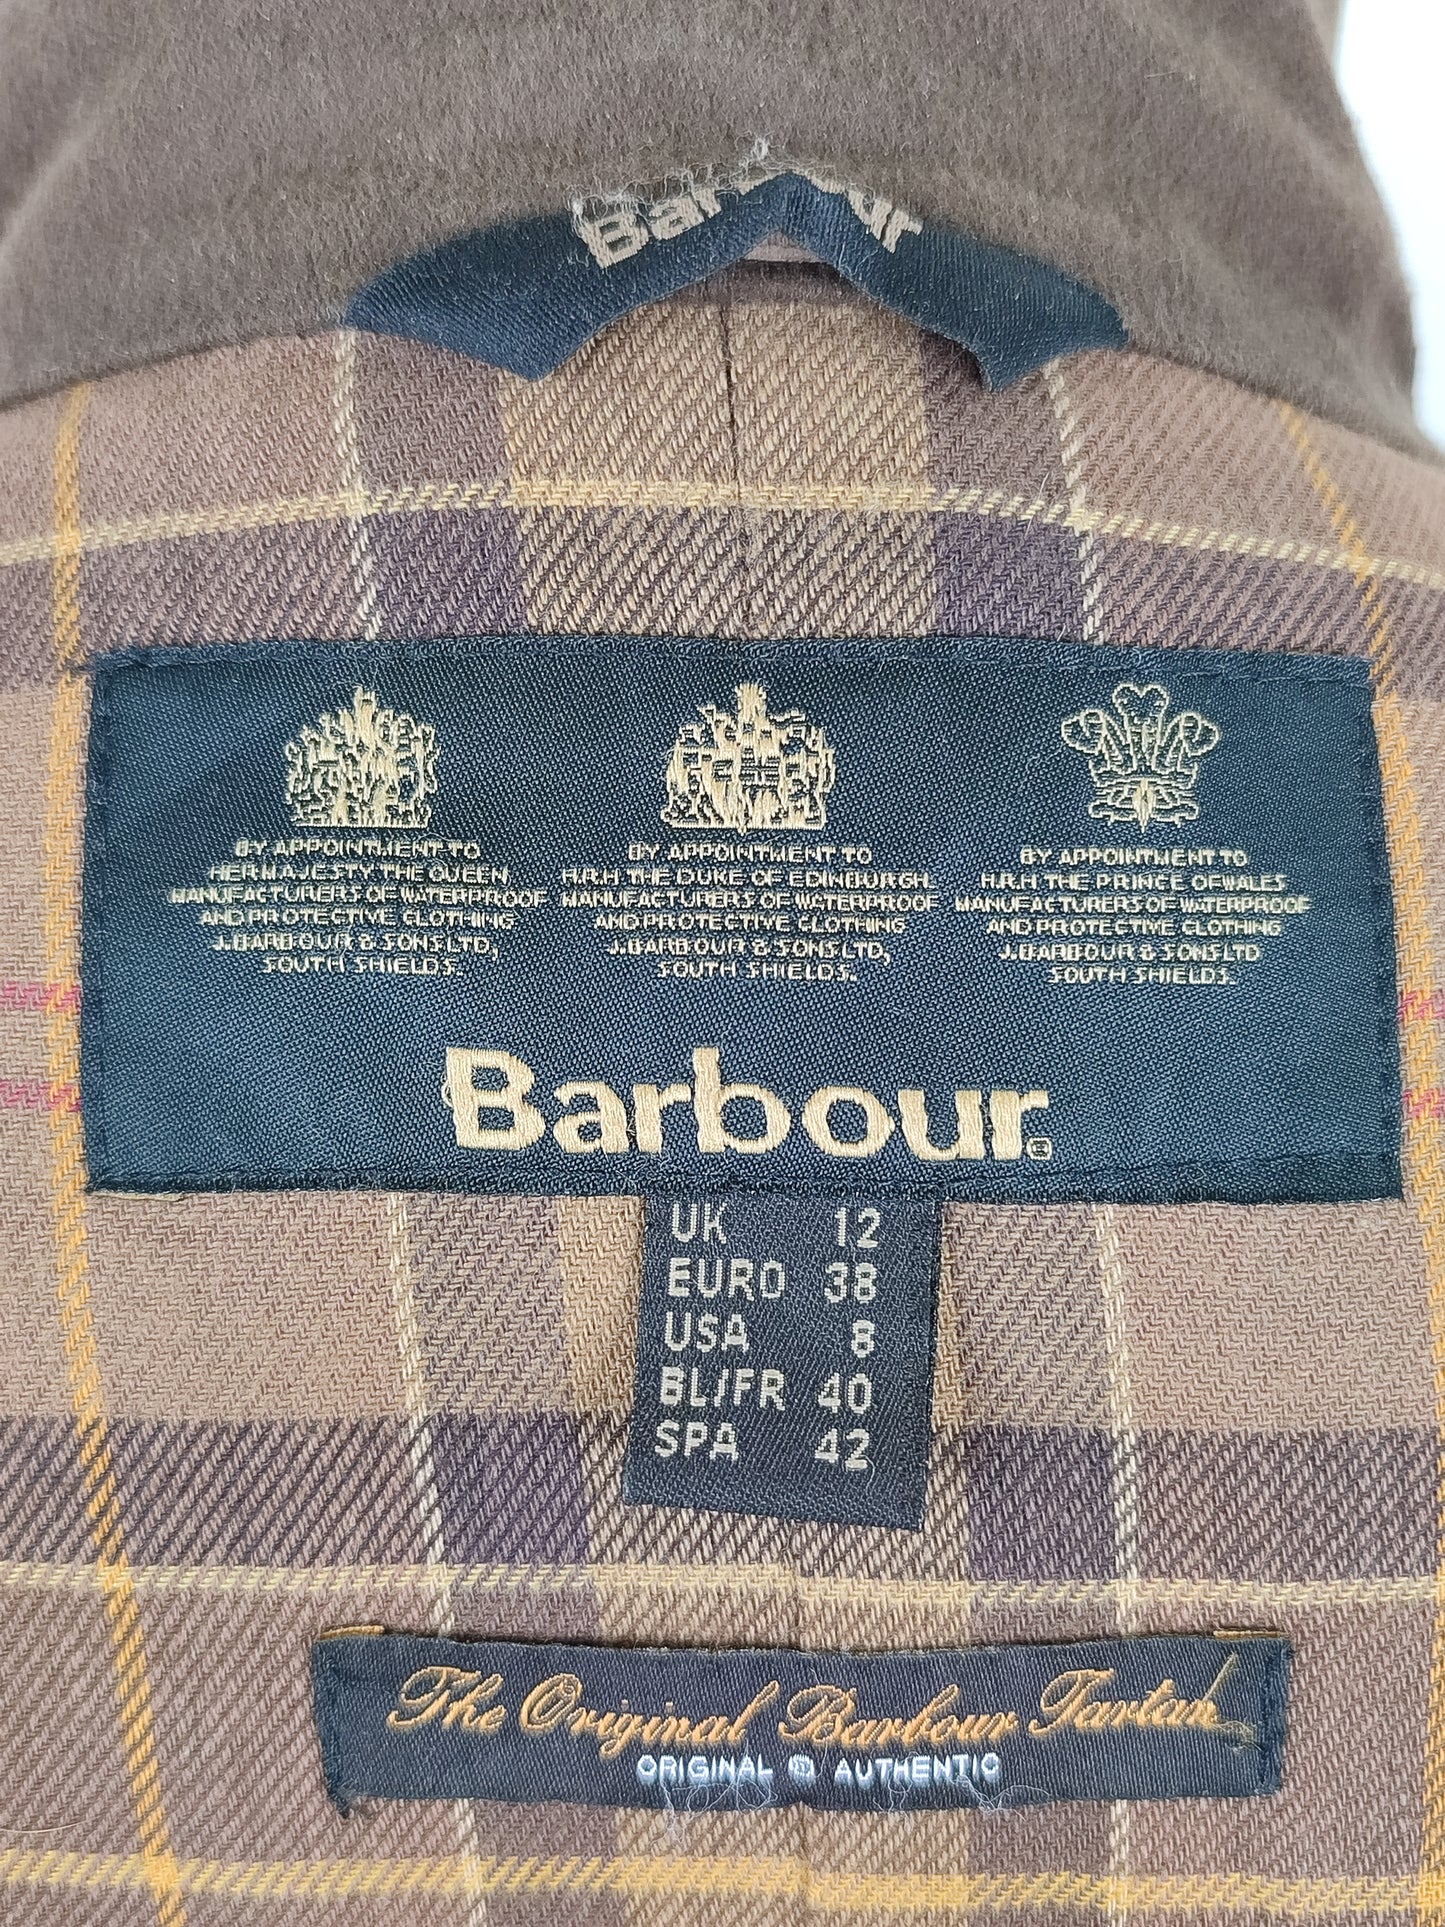 Barbour Giacca corta marrone donna Utility Medium 42 Lady Brown Utility wax Jacket uk12